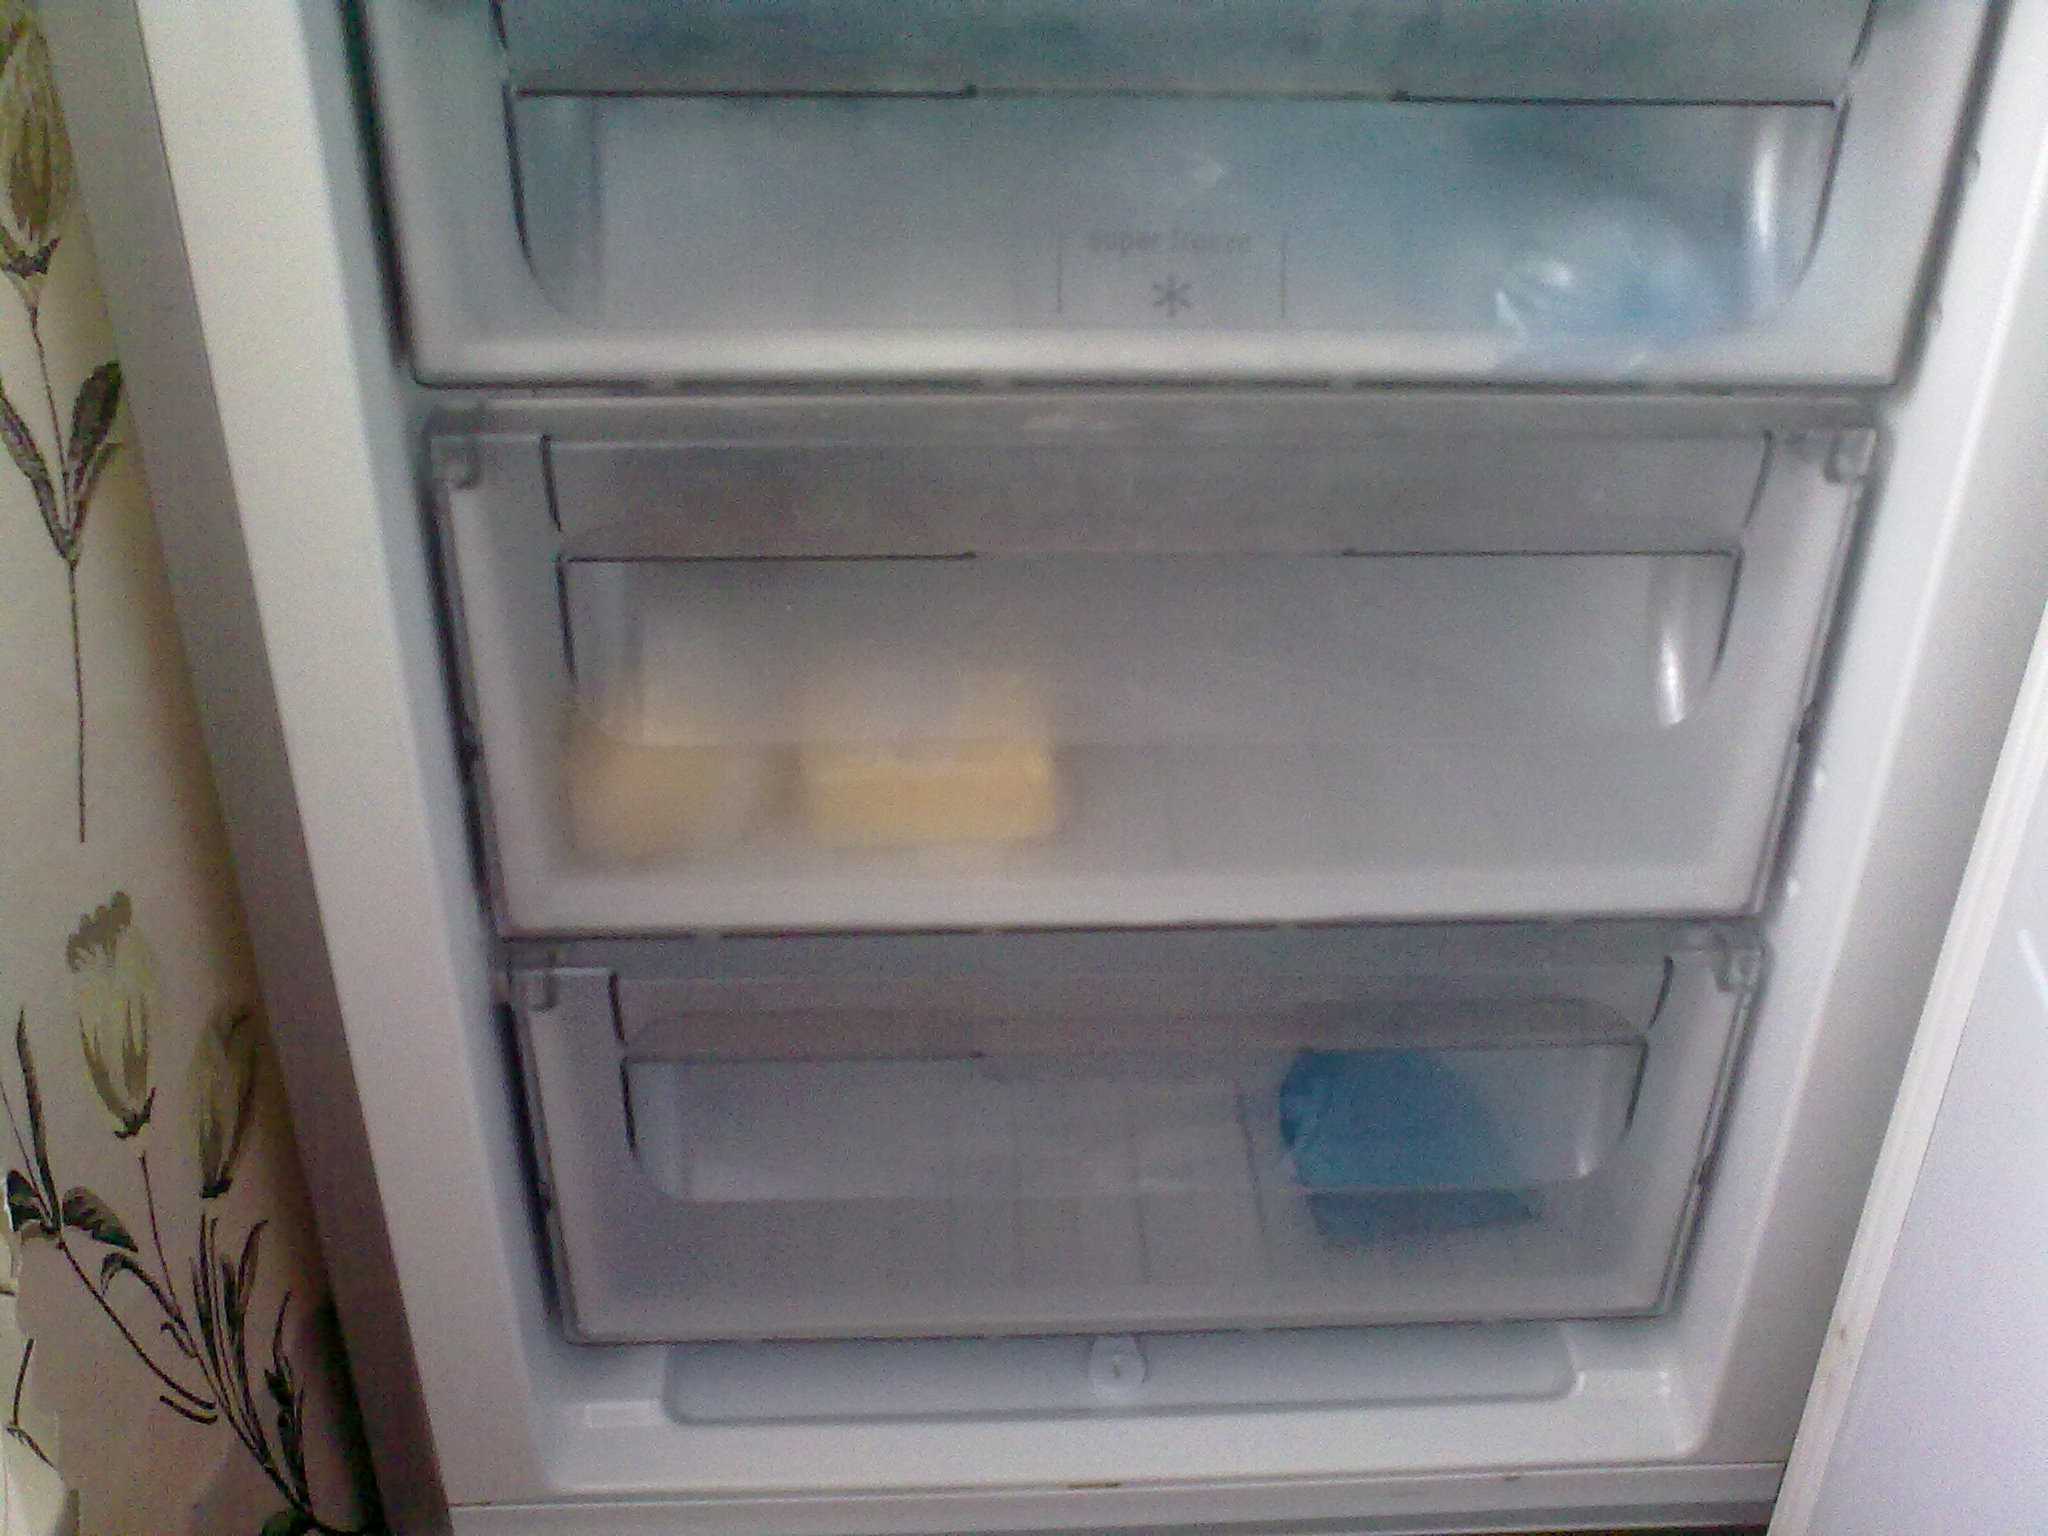 Не морозит камера холодильника